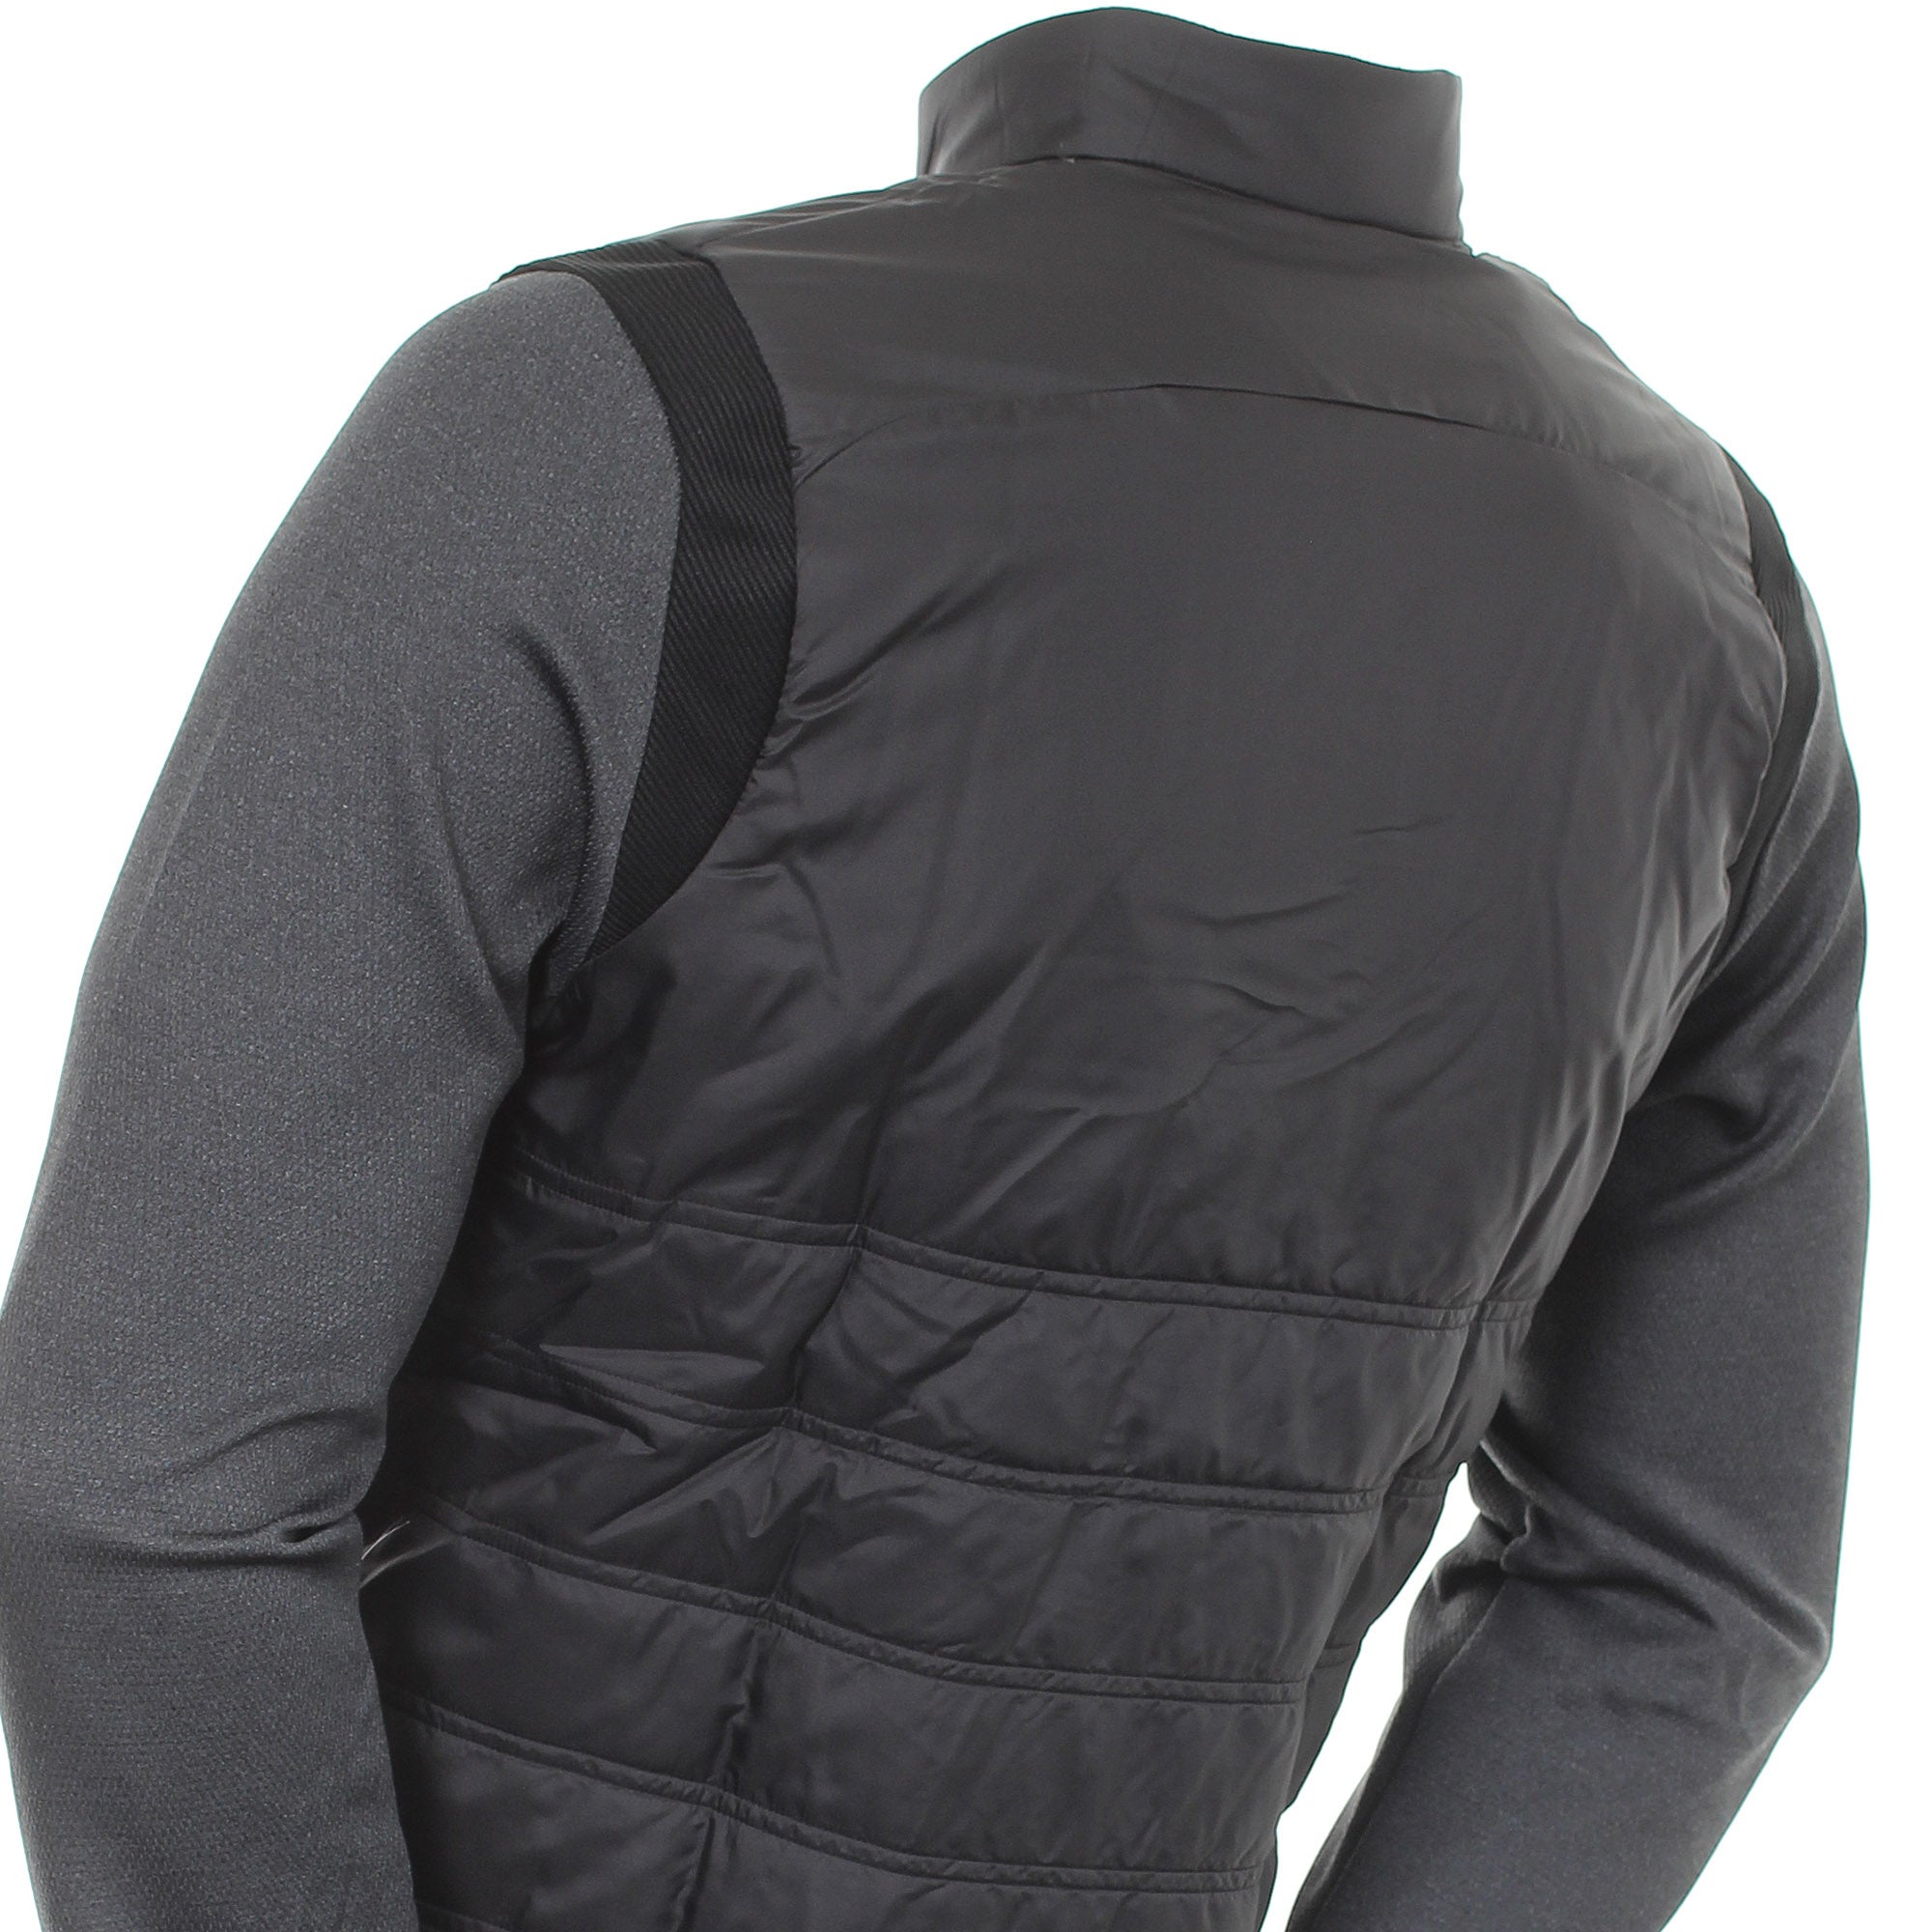 adidas climaheat primaloft thermal golf wind jacket